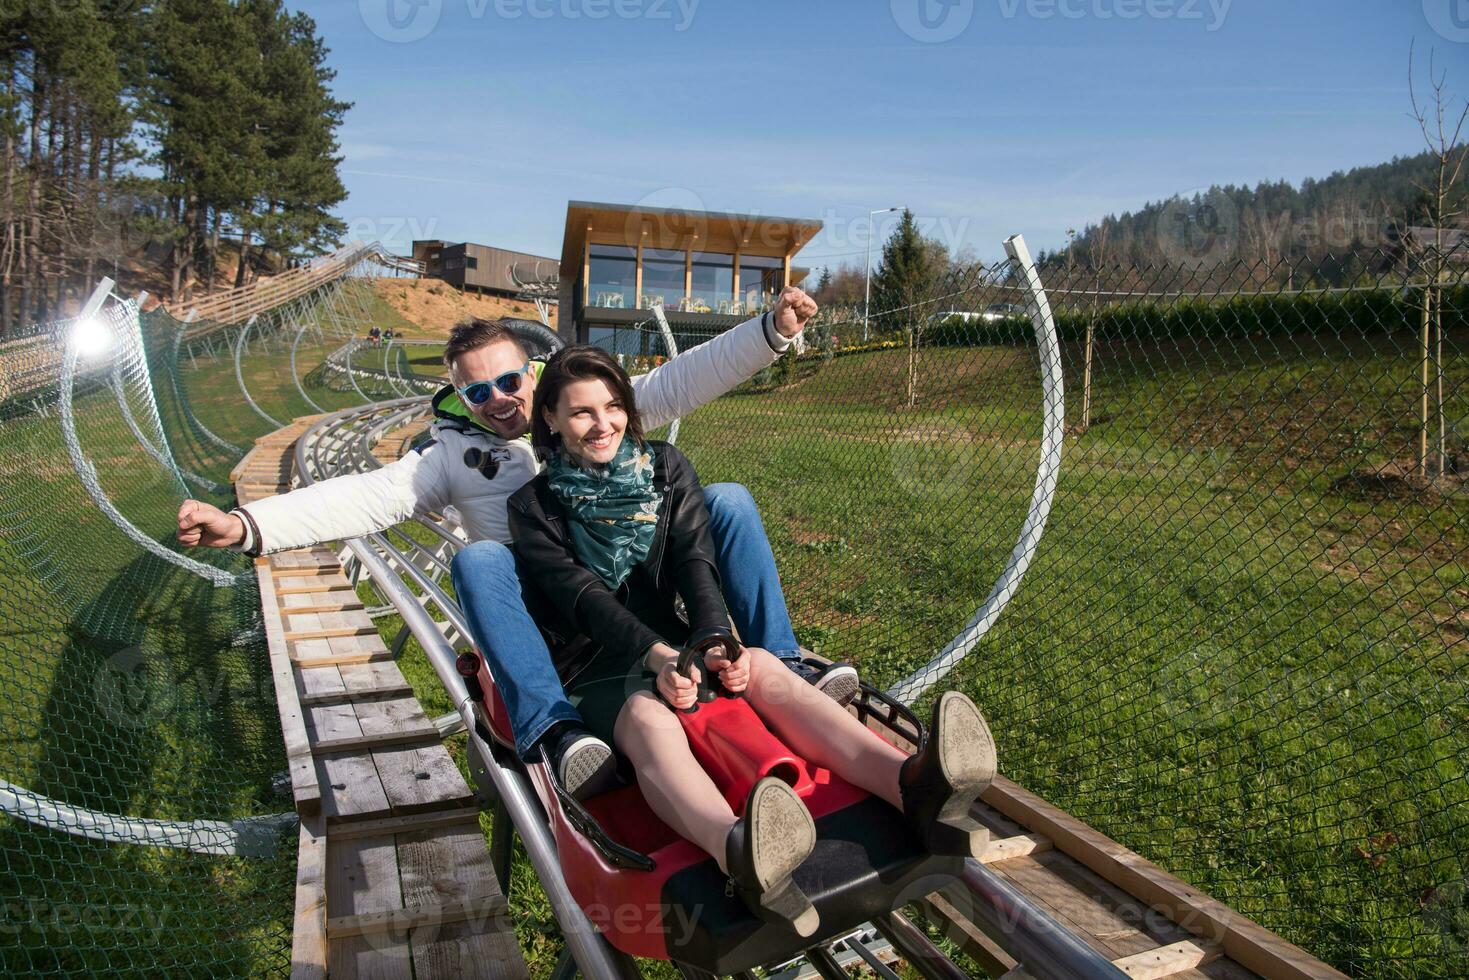 couple enjoys driving on alpine coaster photo